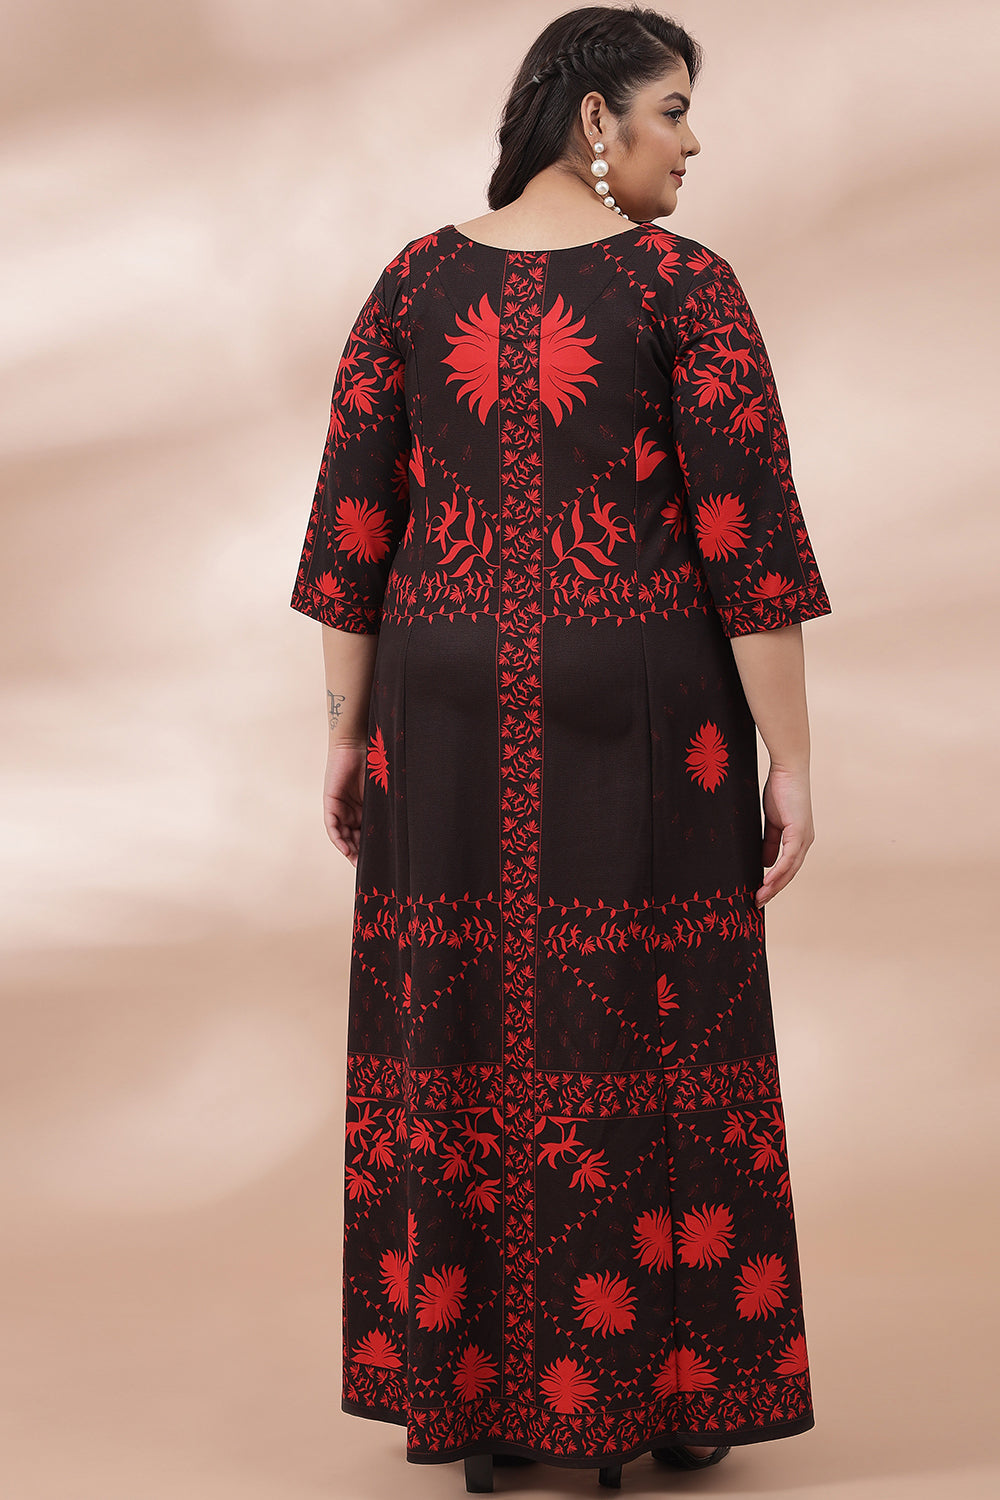 Black Red Ornate Printed Long Dress